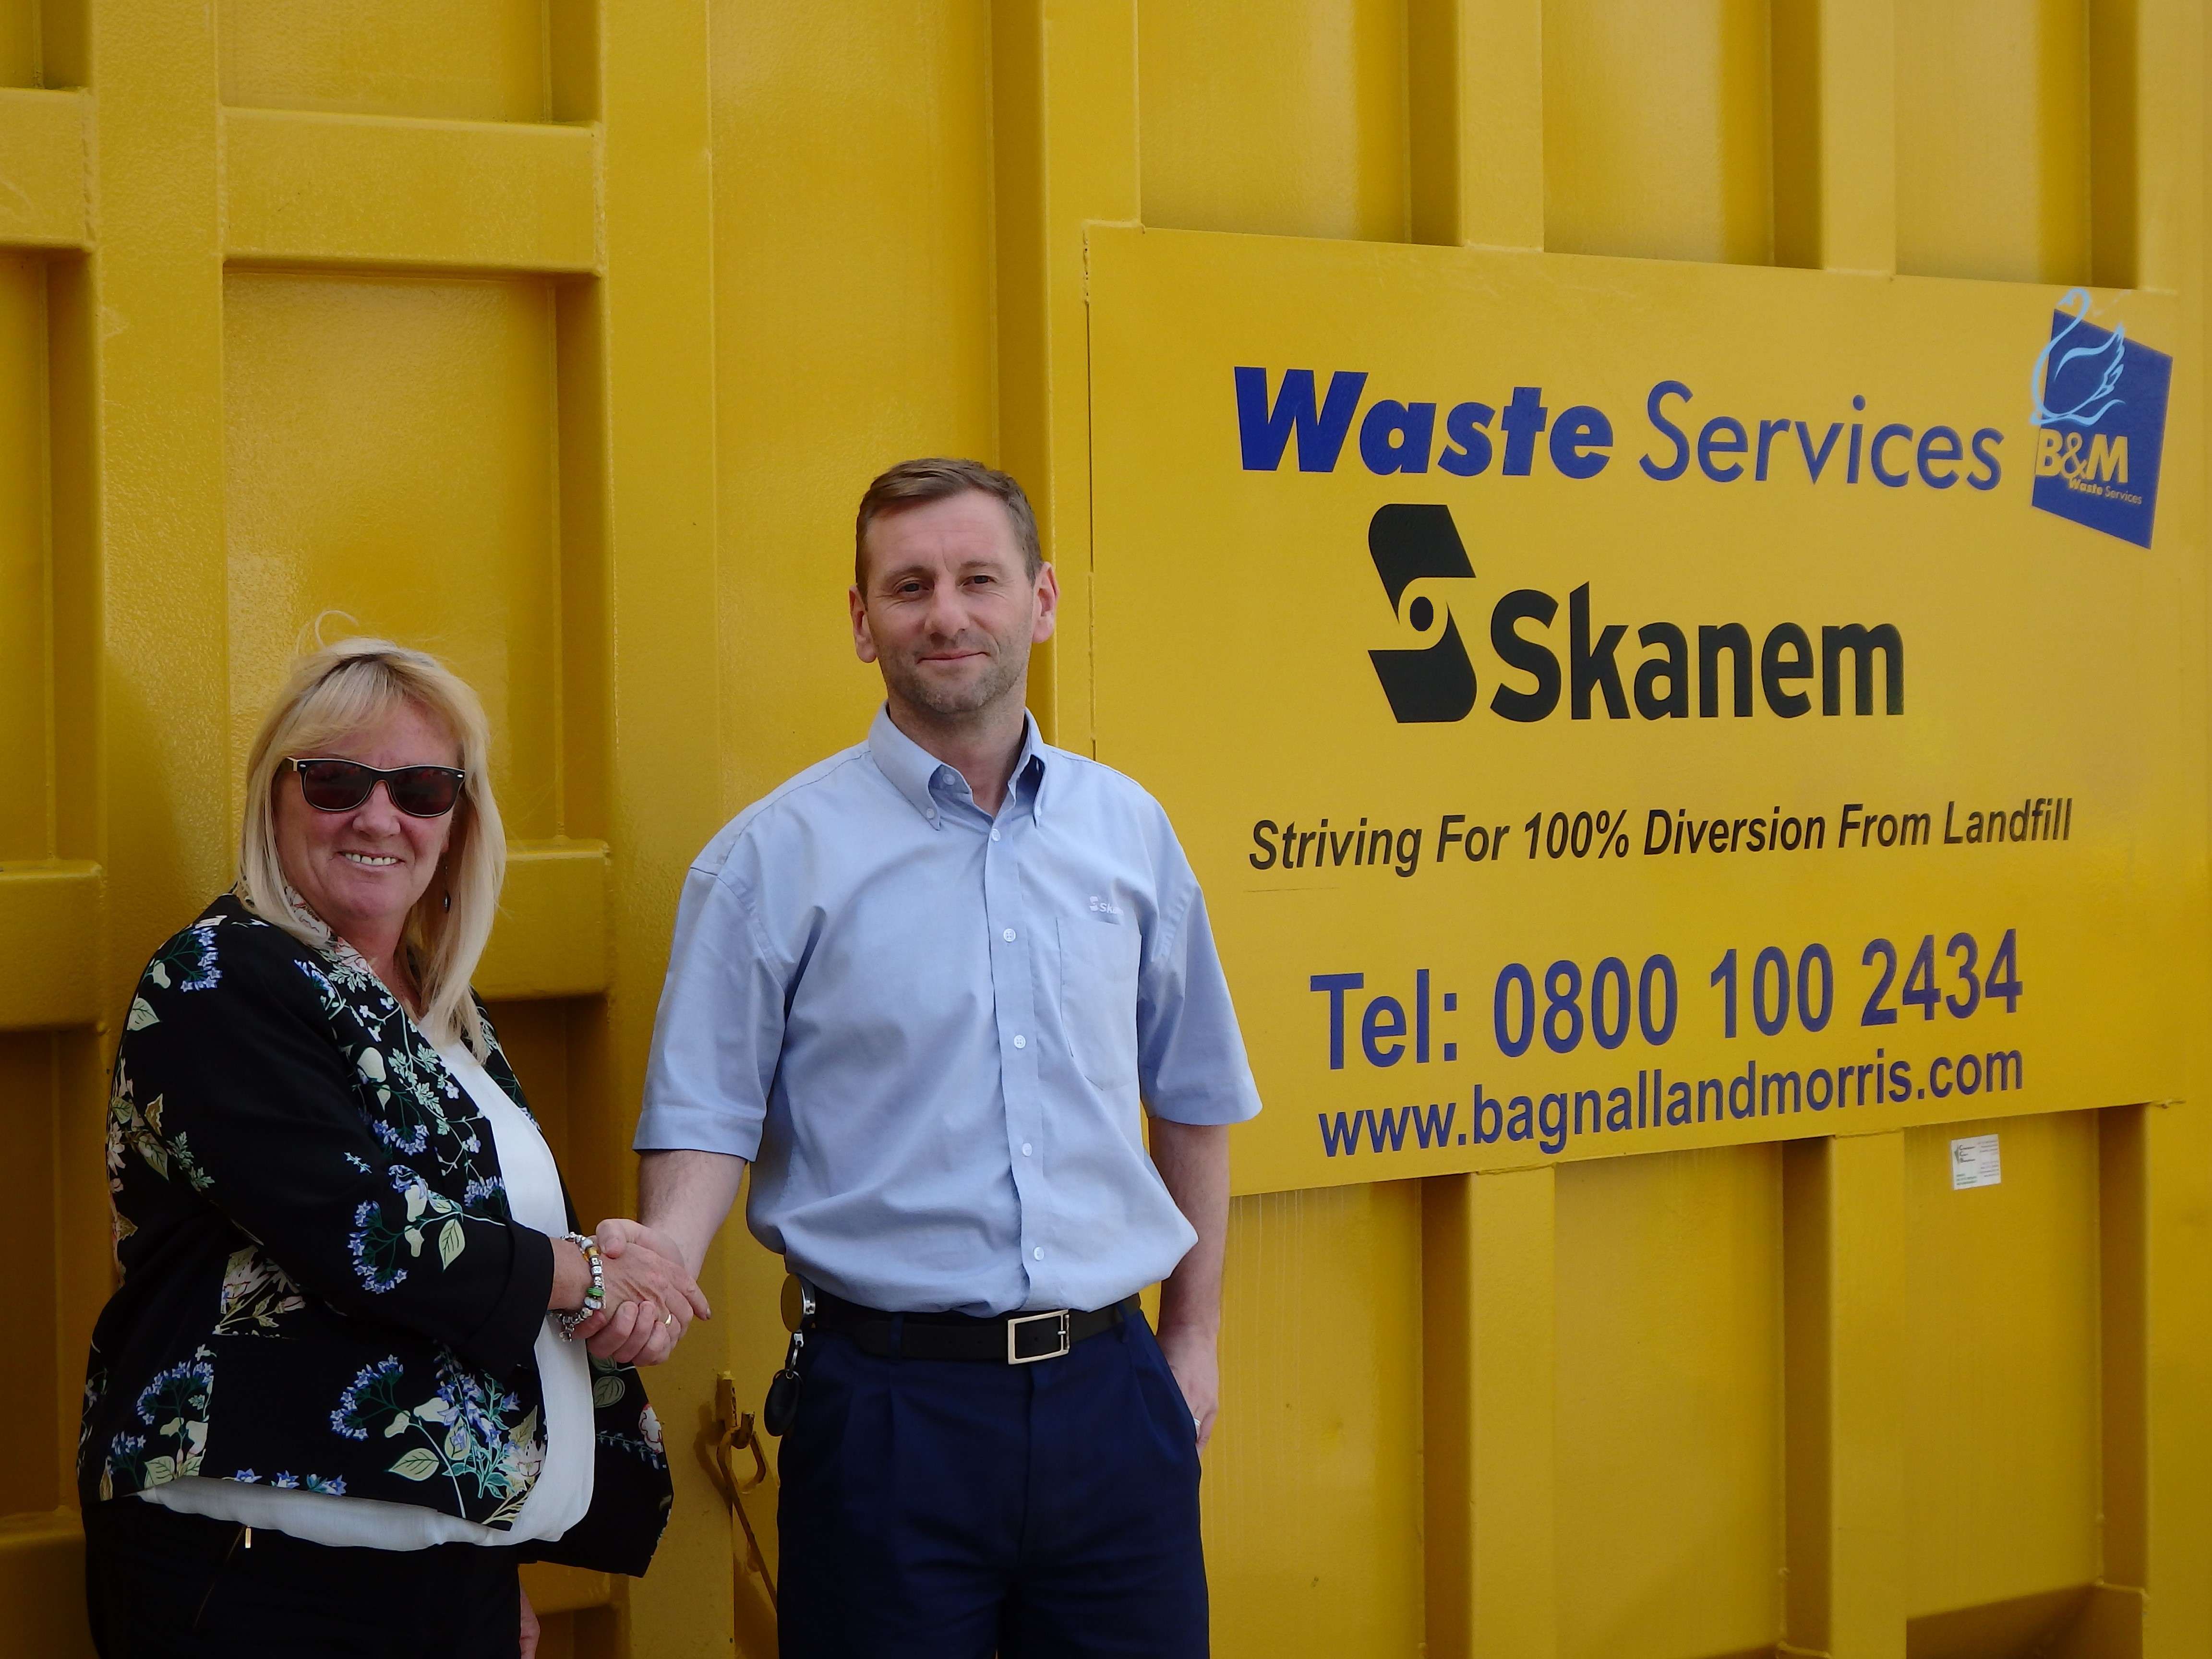 Skanem Liverpool achieves zero to landfill target